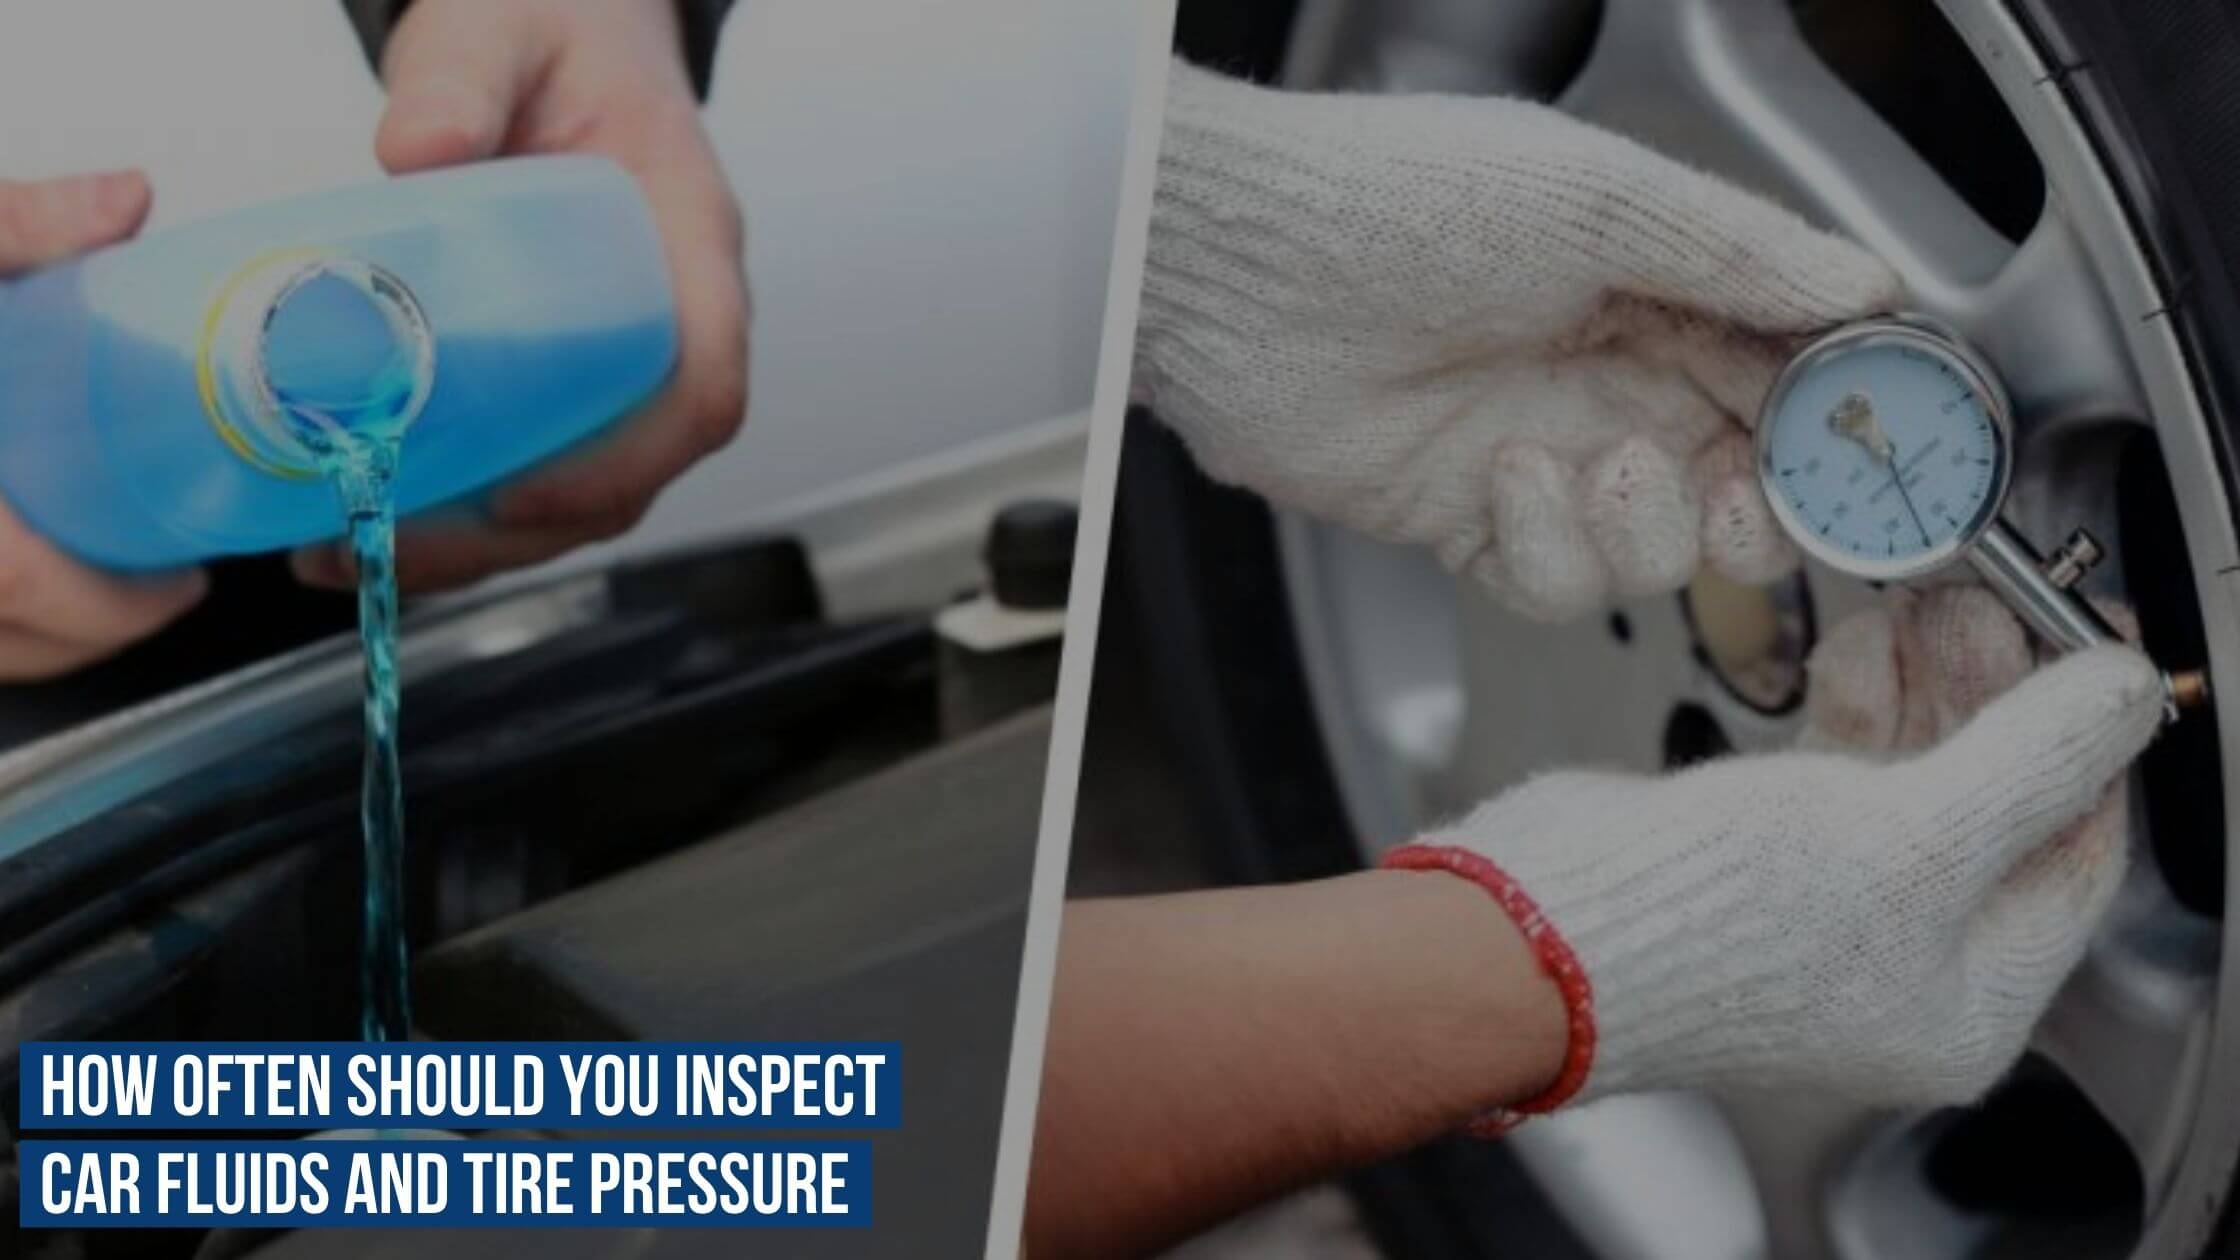 Inspect Car Fluids And Tire Pressure